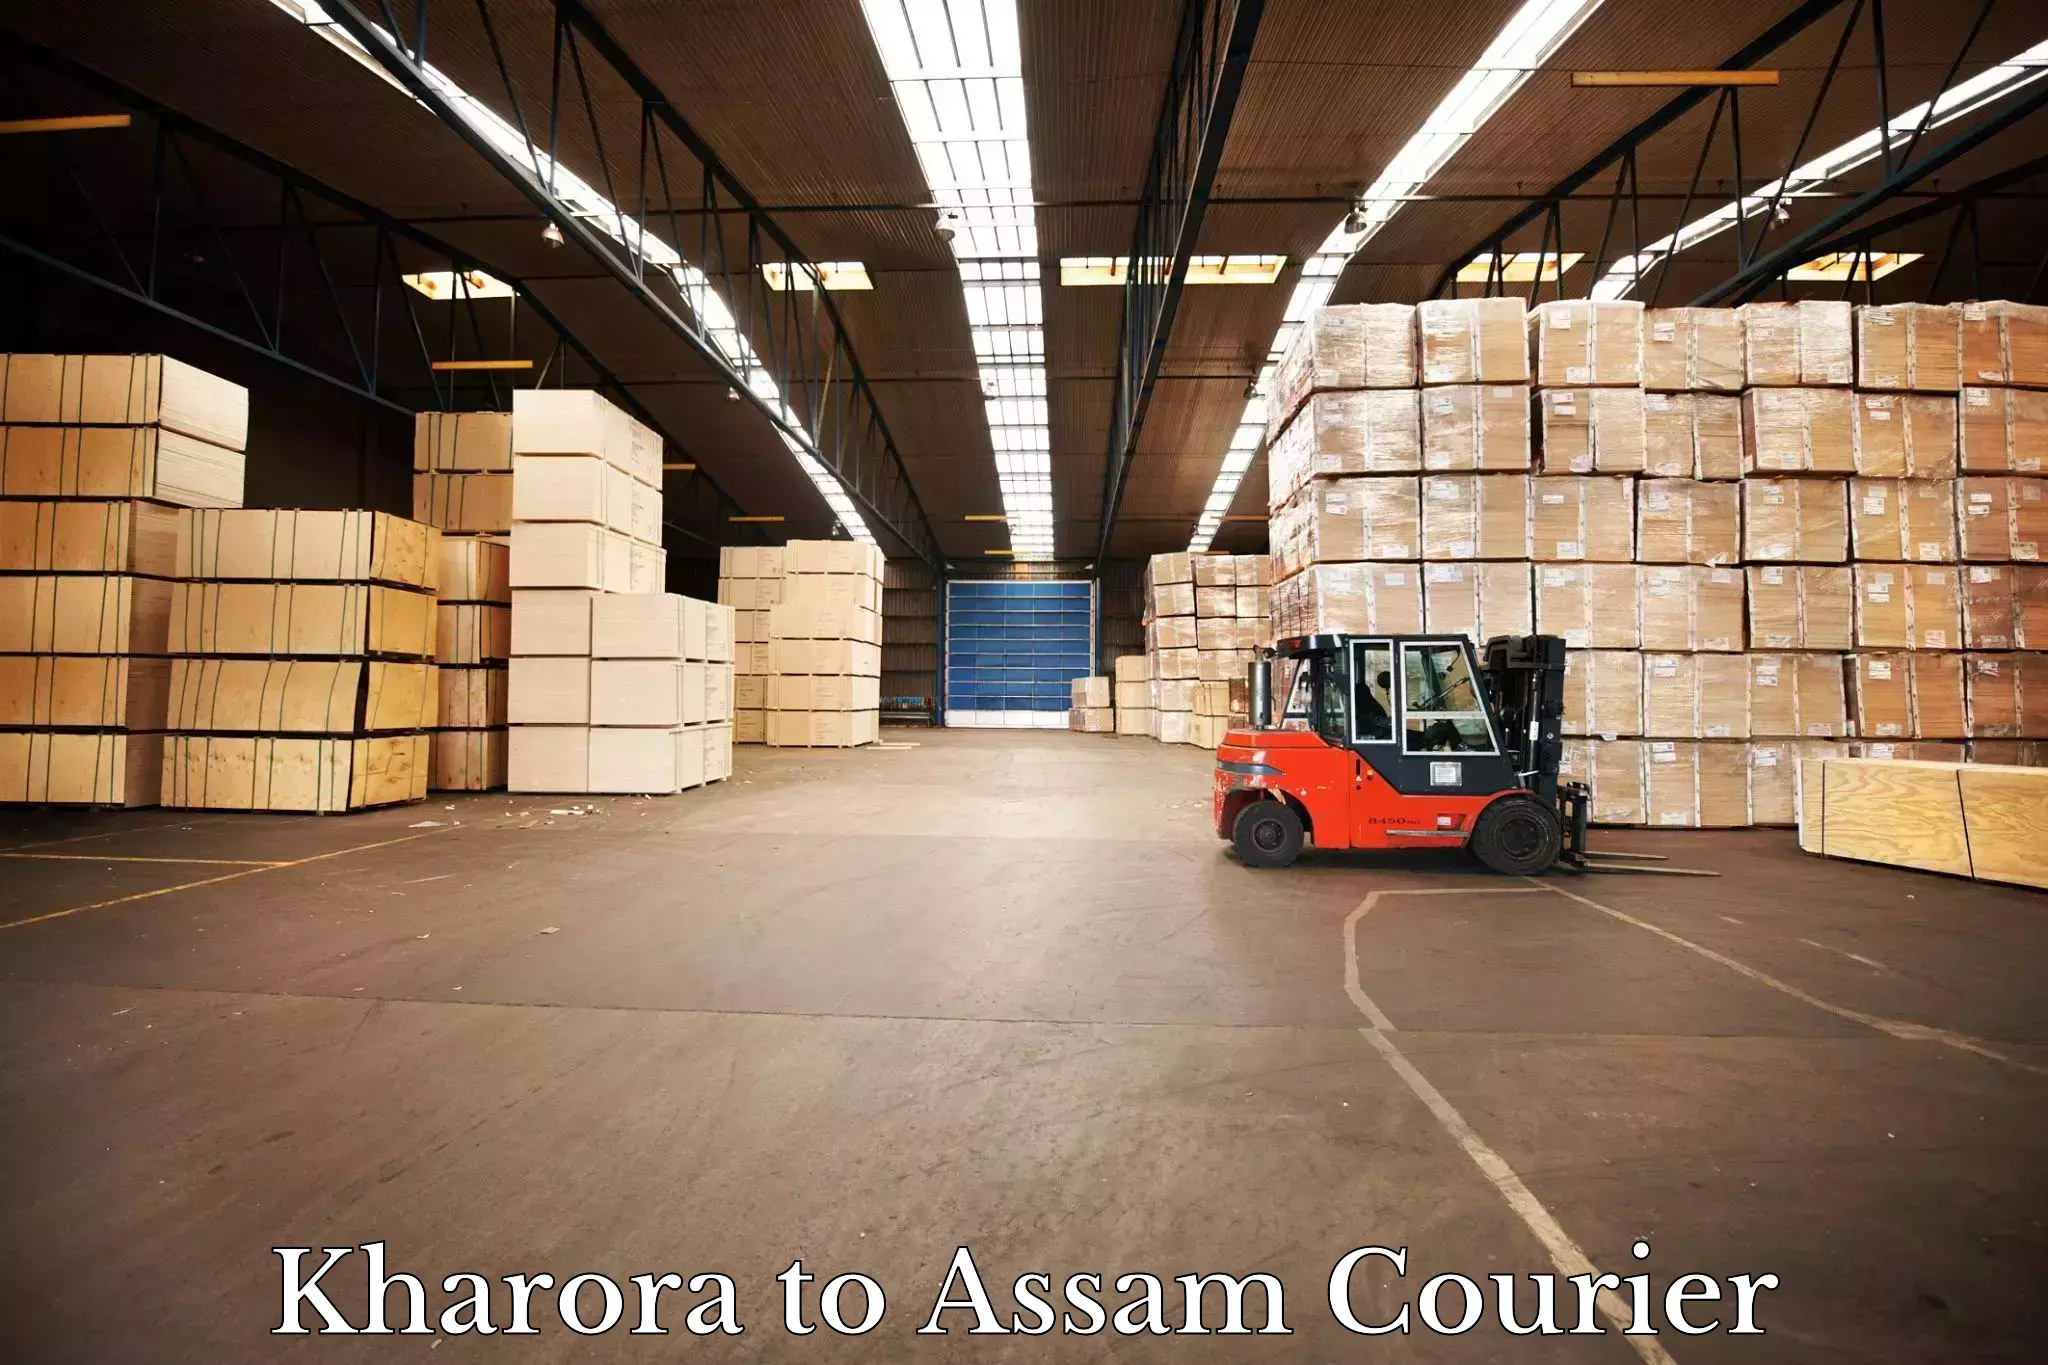 Efficient order fulfillment in Kharora to Assam